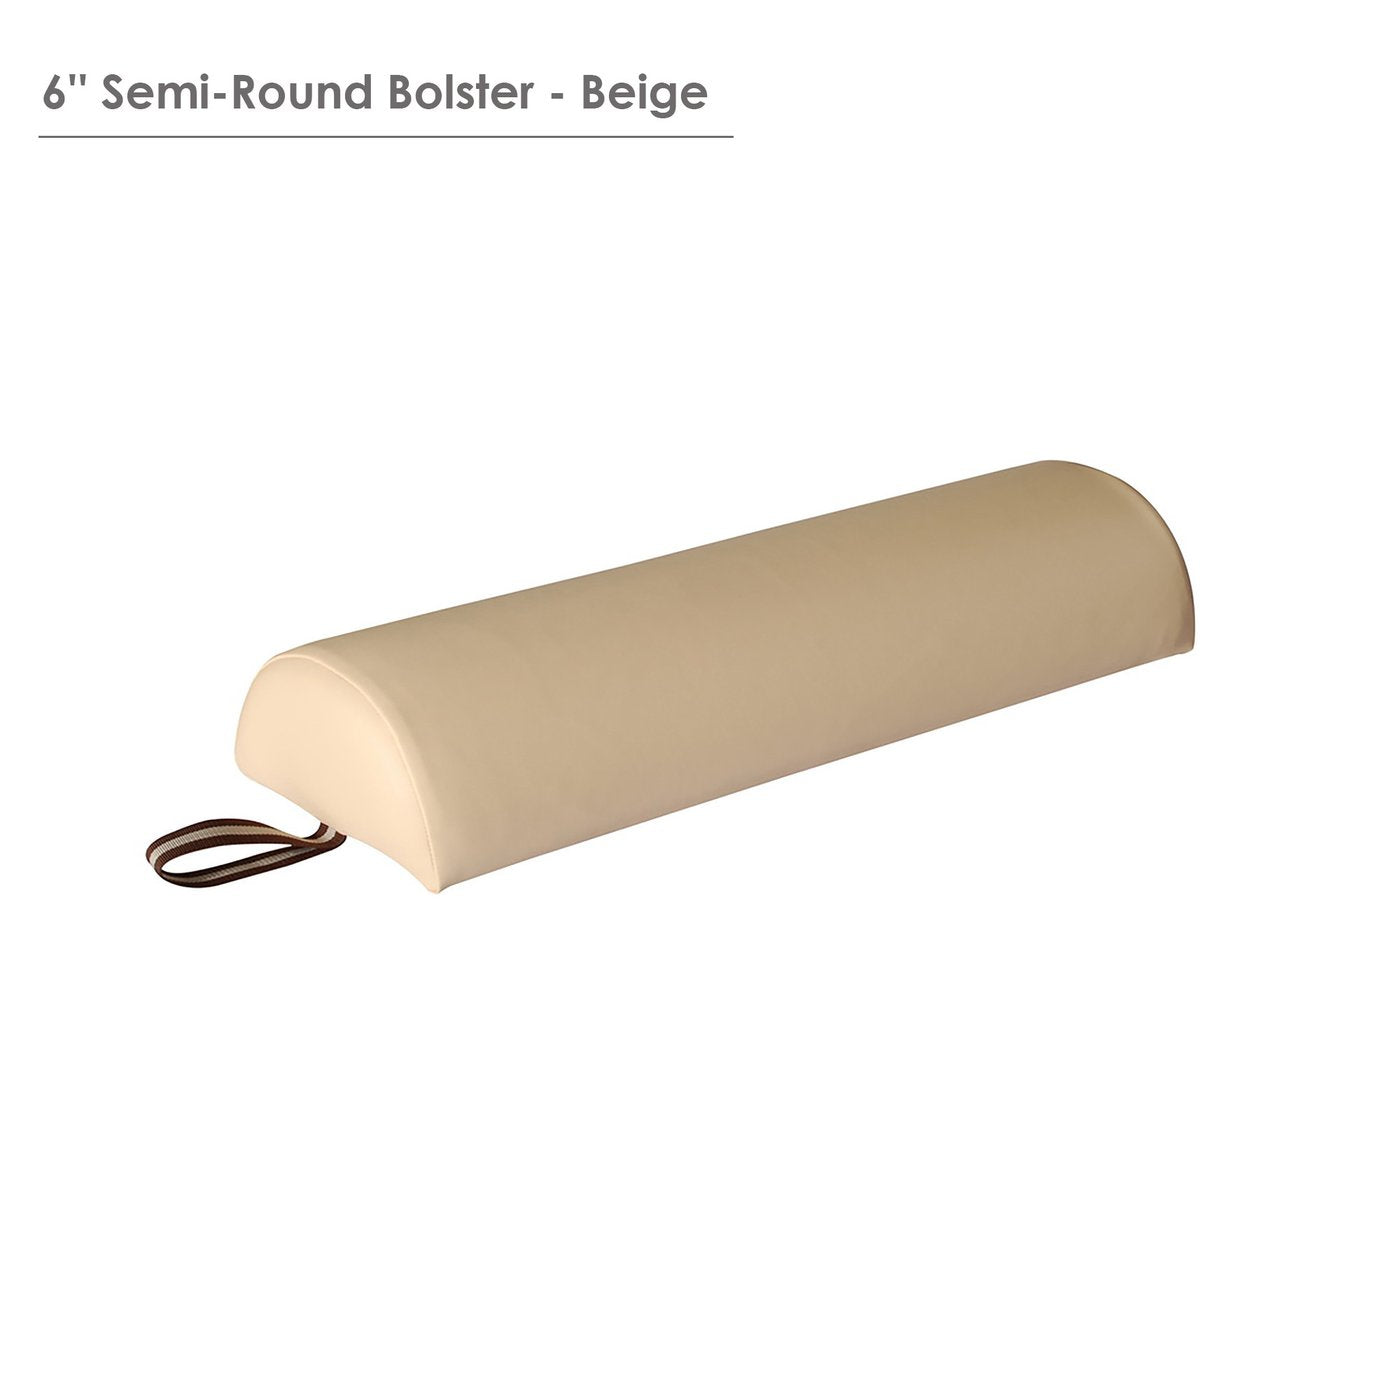 Large 6" Semi-Round Bolster